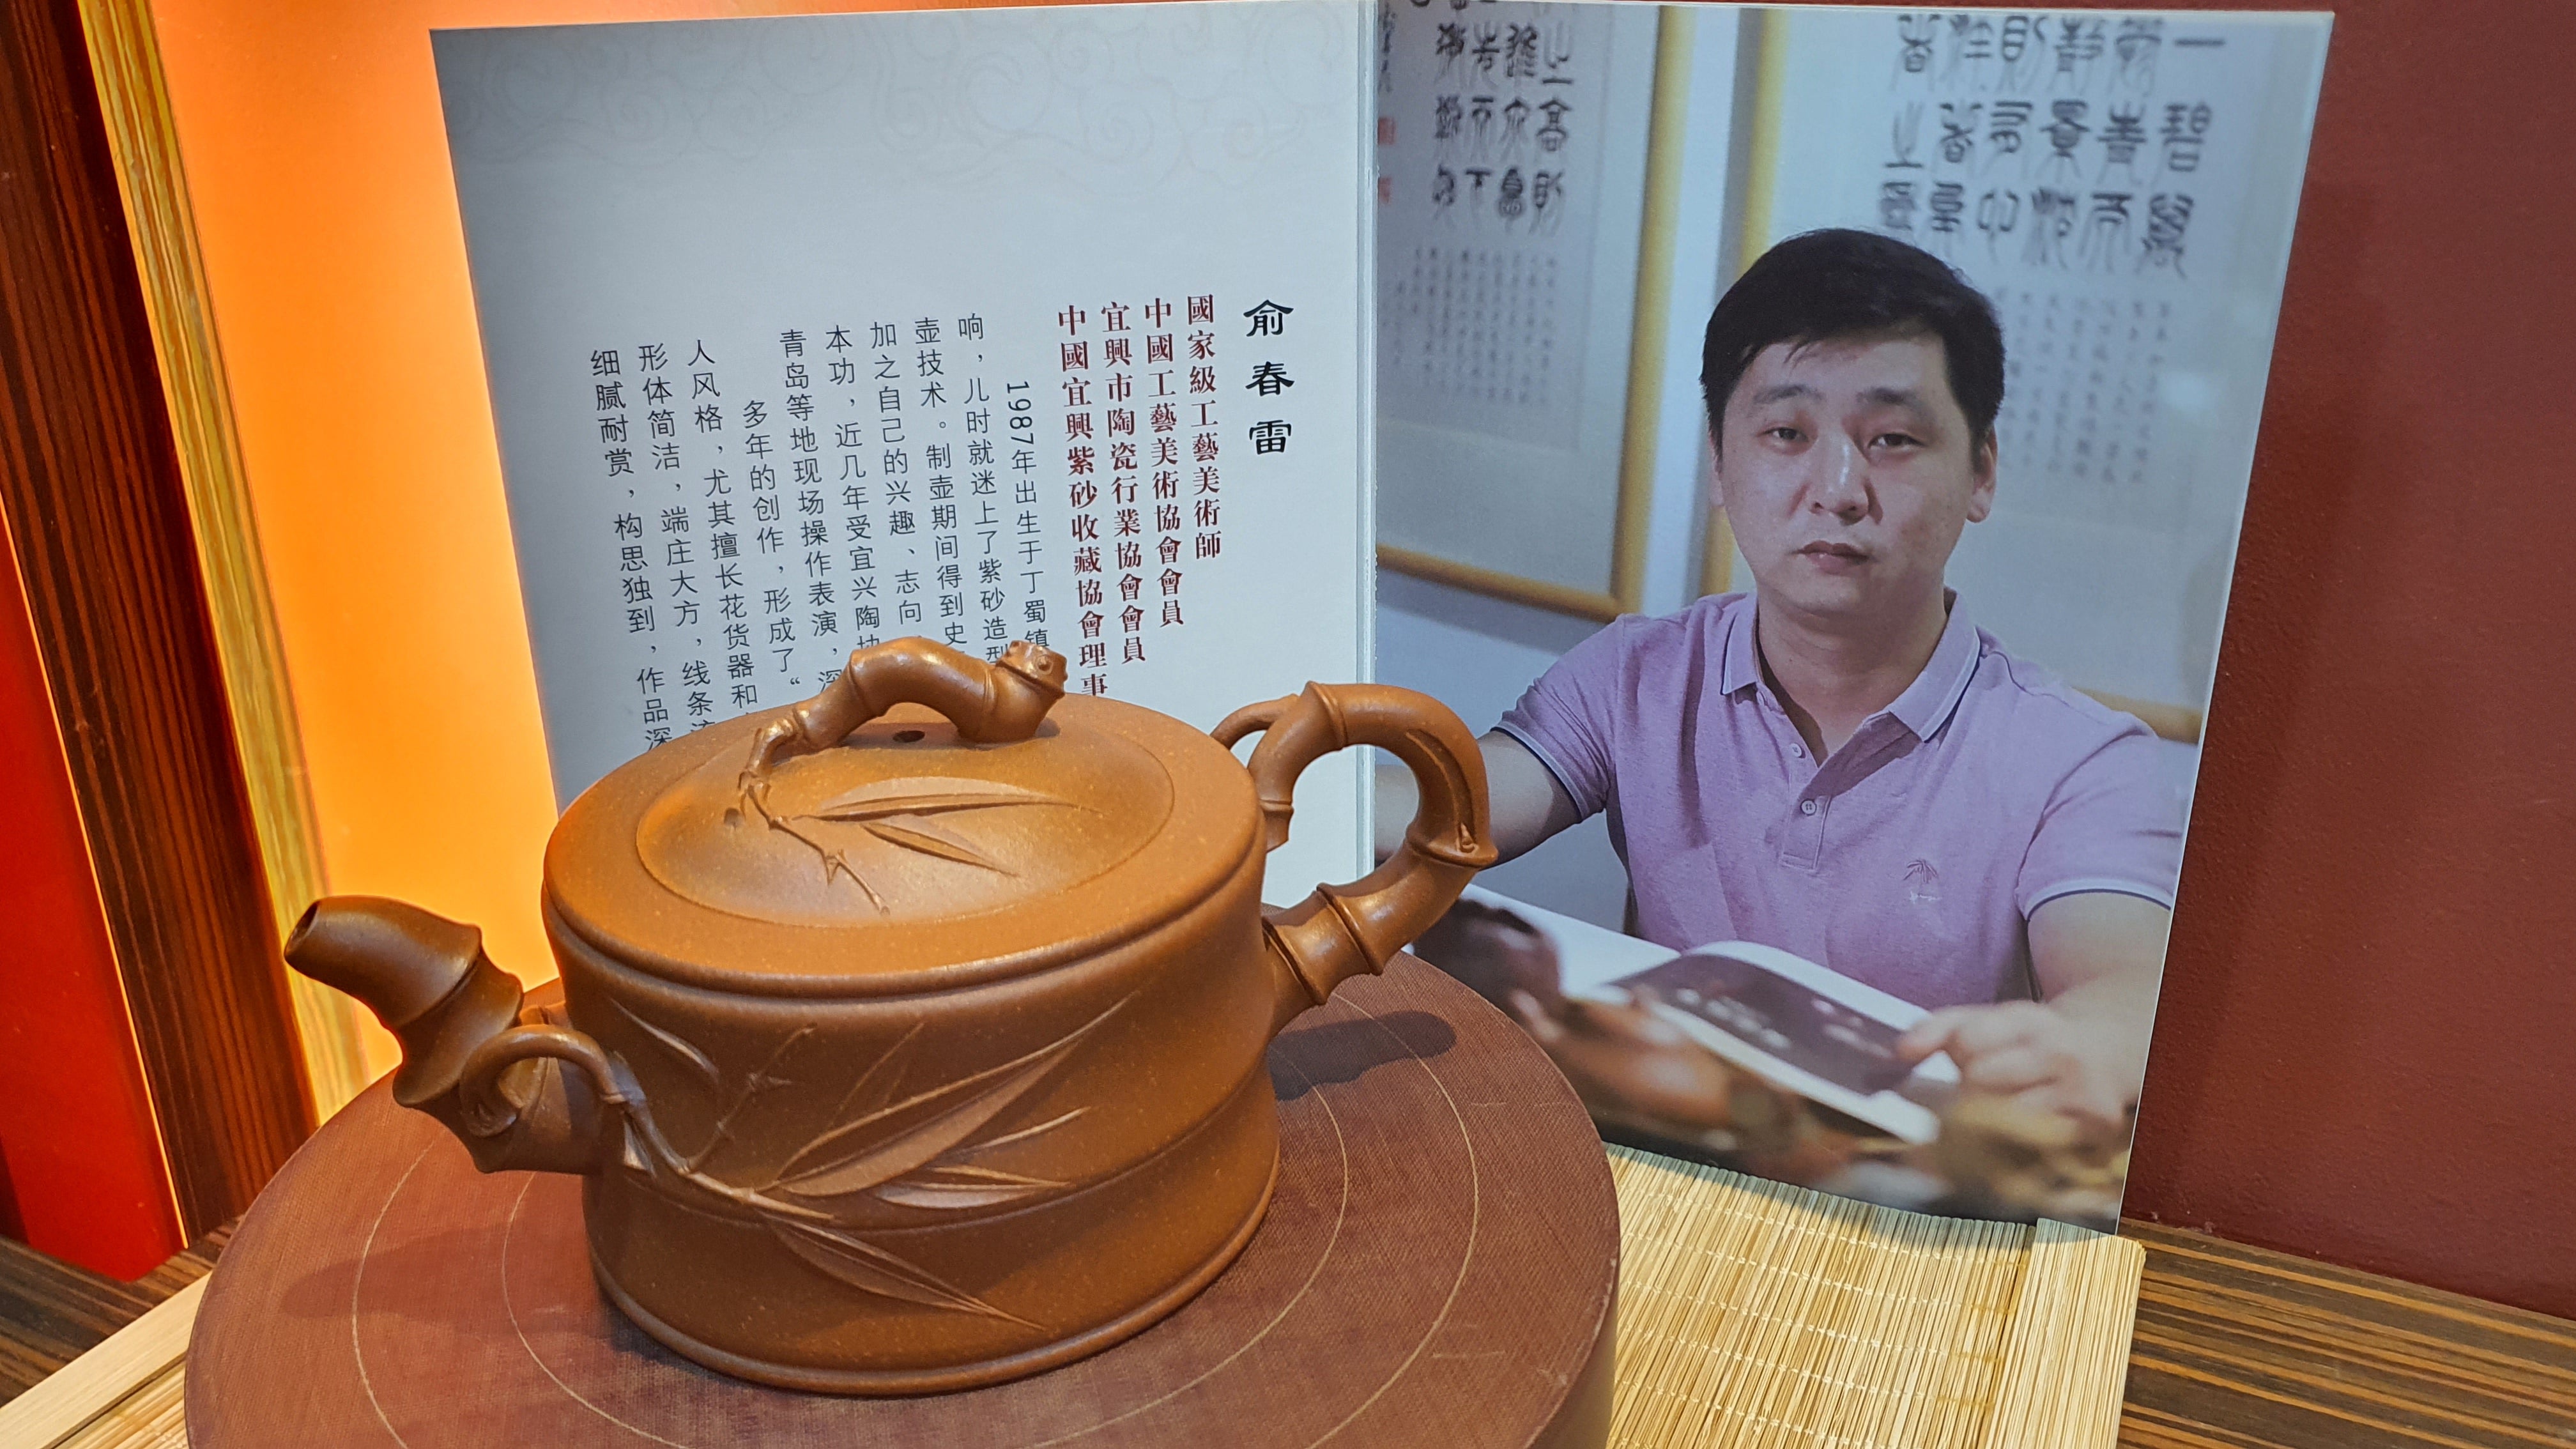 Zhu Duan 竹段, Jiang Po Ni 降坡泥, 230ml, by our collaborative L4 Assoc Master Yu Chun Lei 俞春雷。~ sold to an esteemed Collector in August 2022.